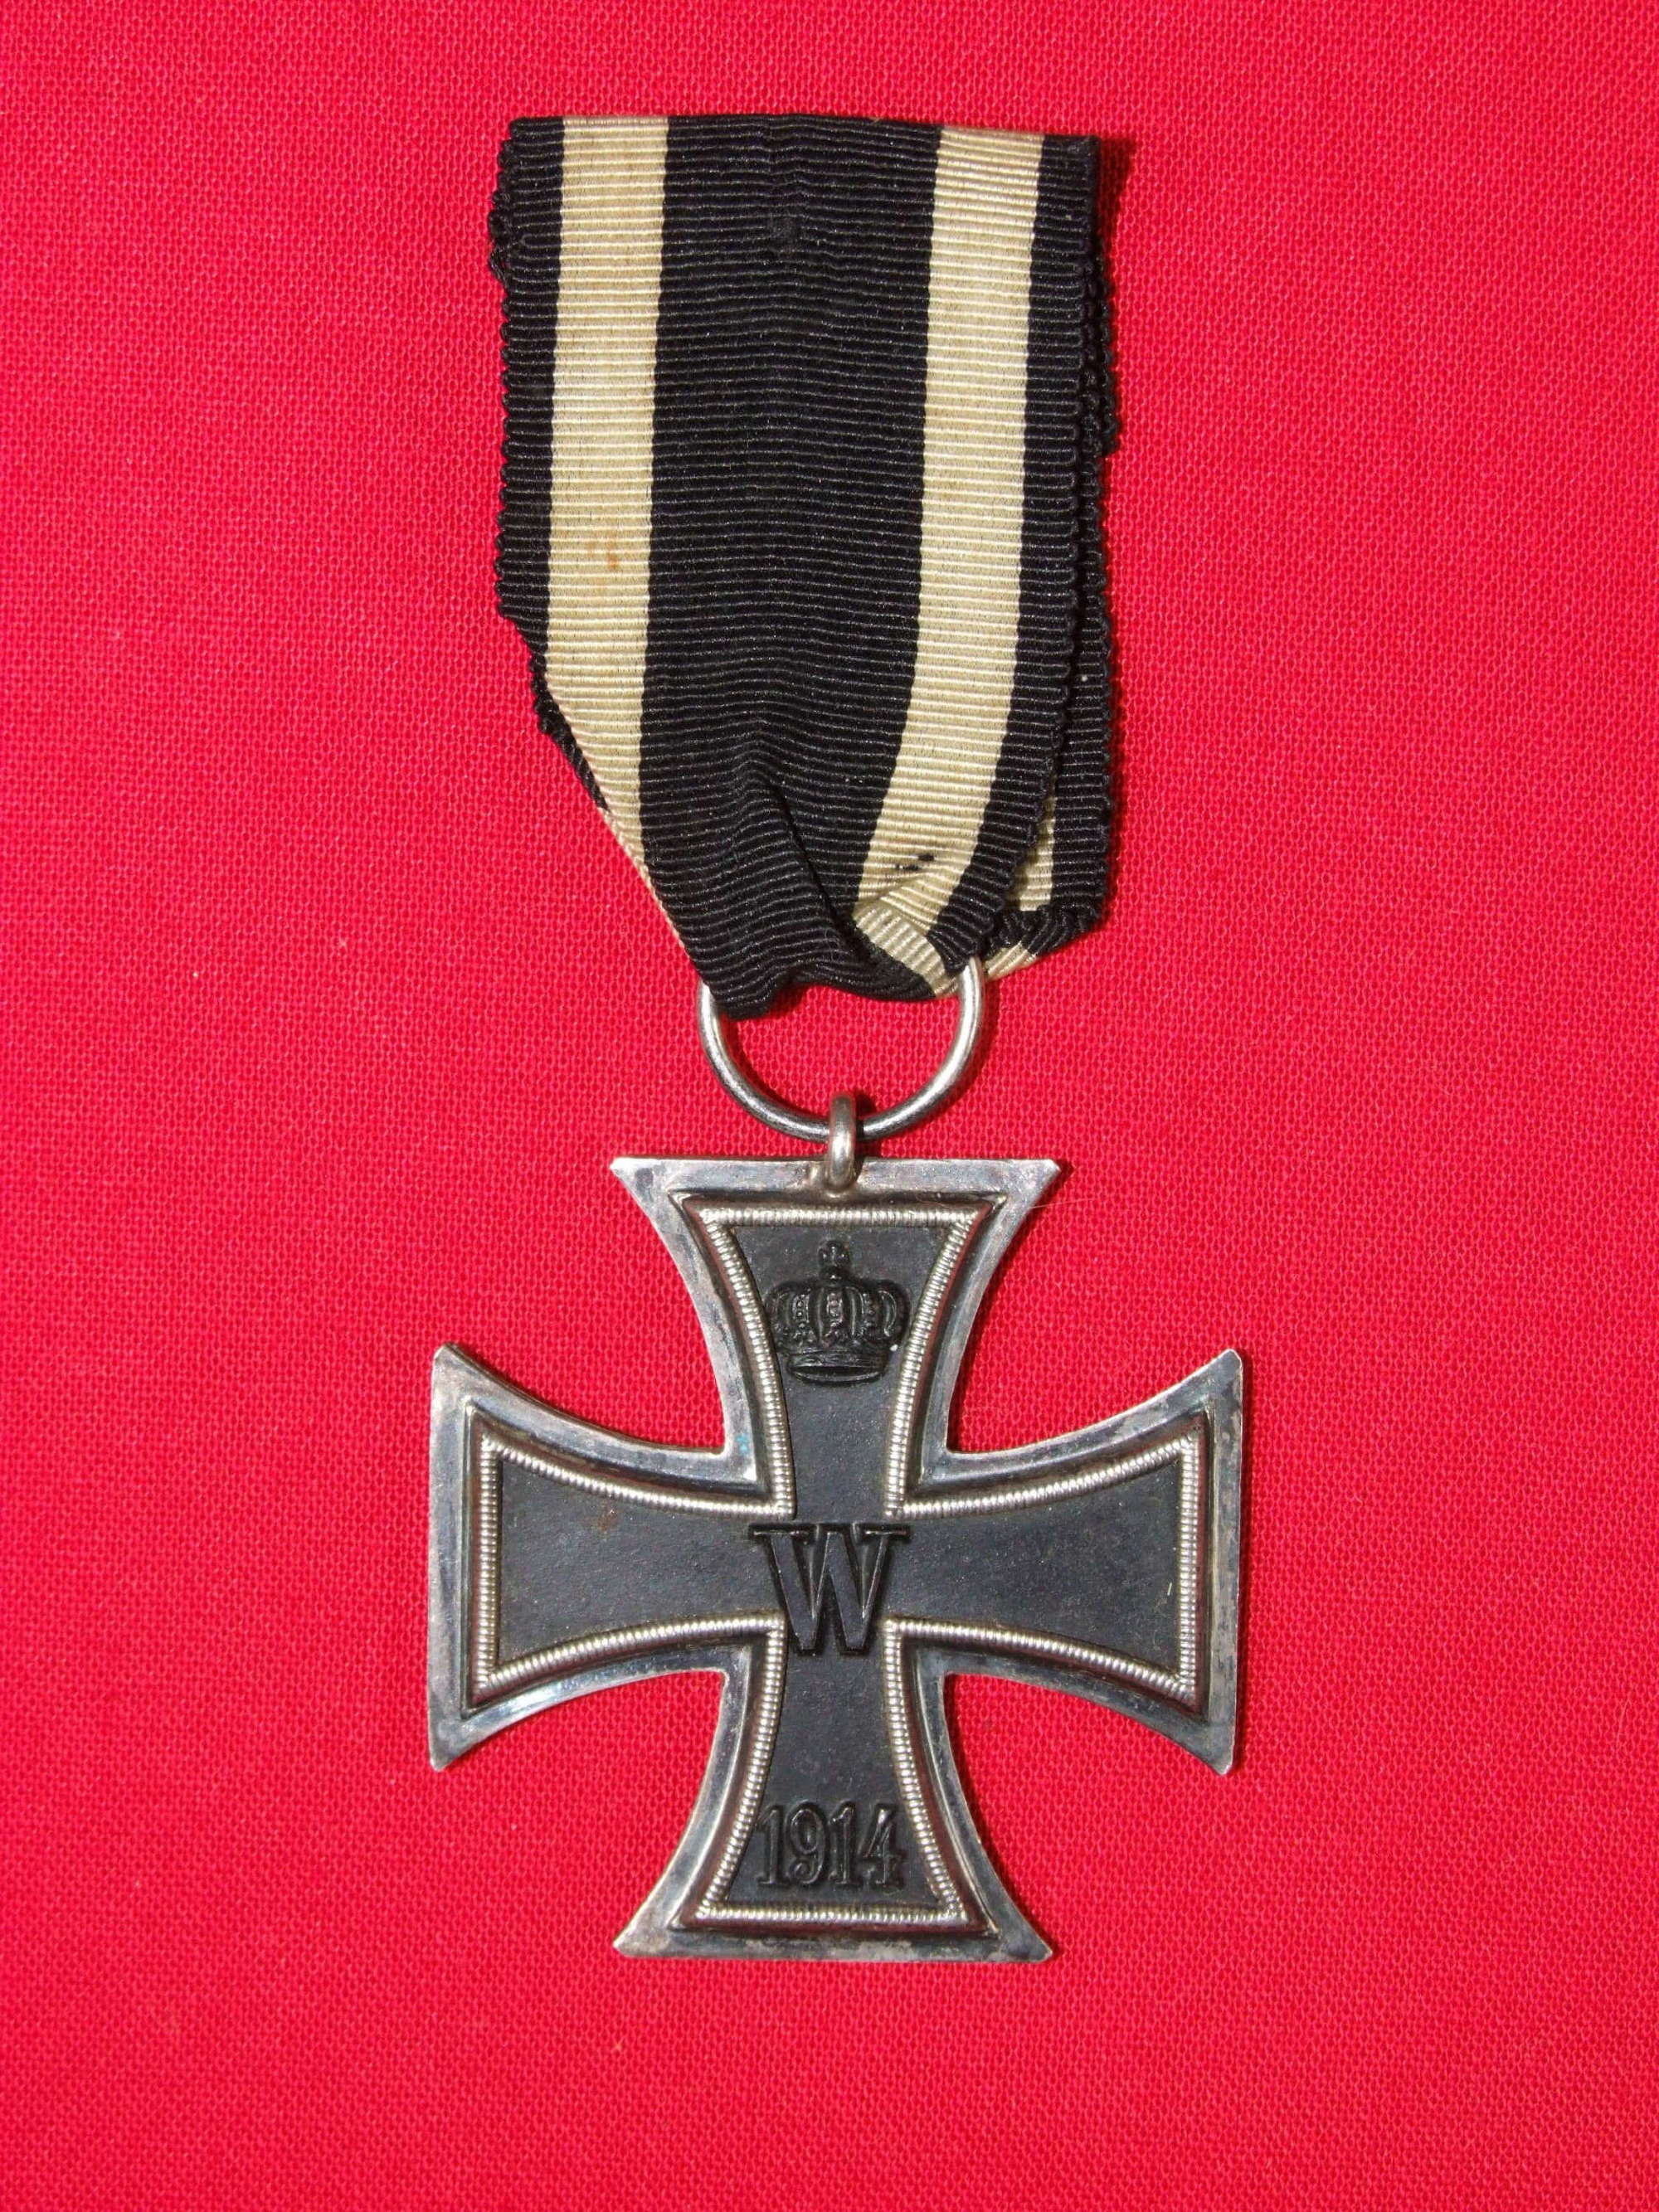 WW1 Imperial Iron Cross Second Class